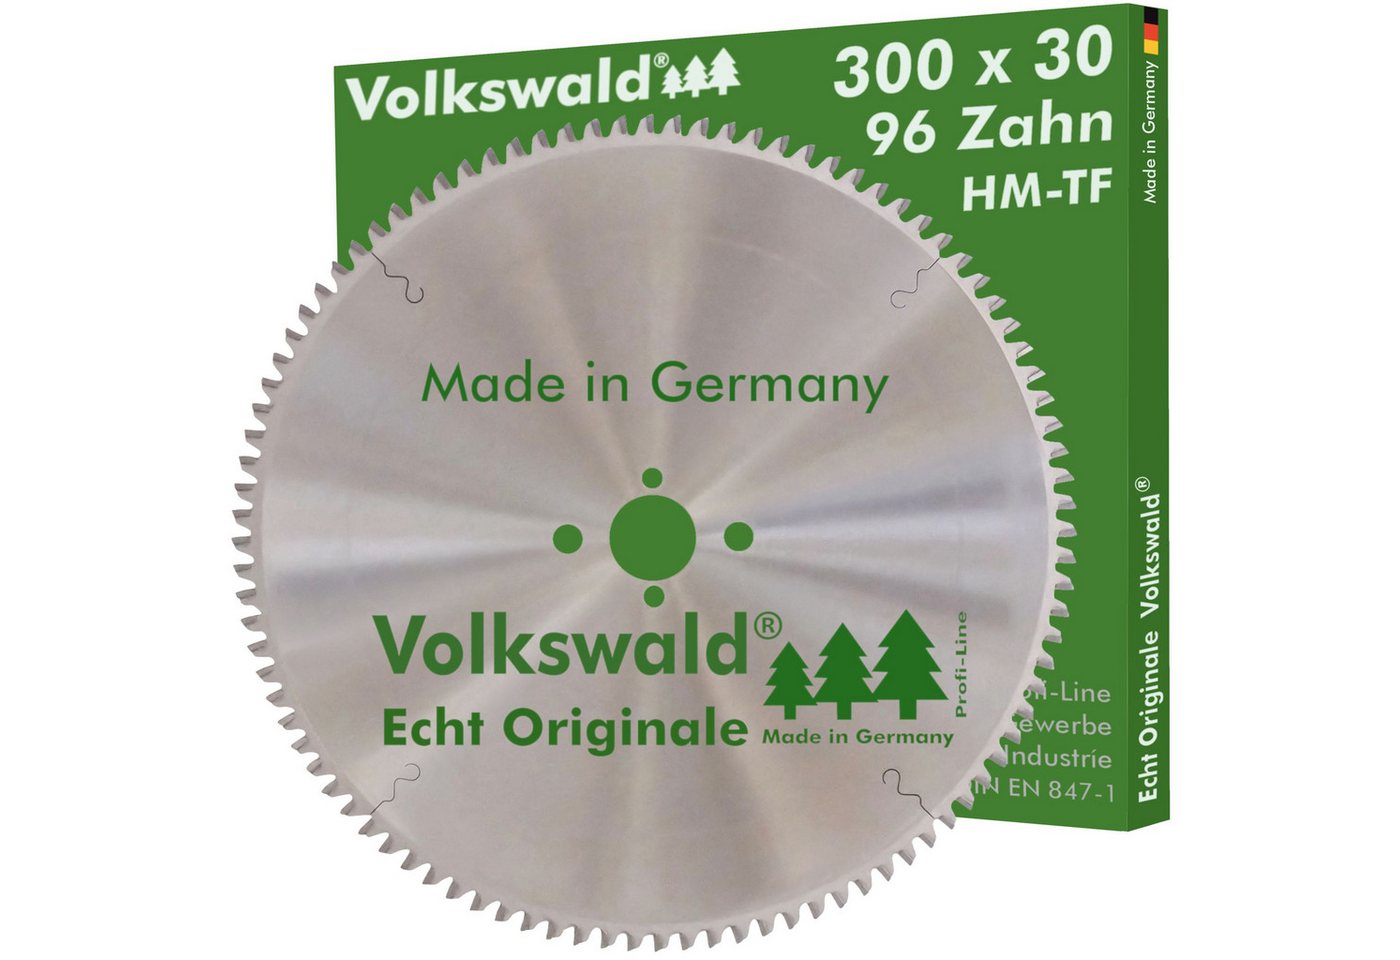 Volkswald Kreissägeblatt Volkswald ® HM-Sägeblatt TF 300x30mm Z=96 Weichholz Kreissägeblatt, Echt Originale Volkswald® Made in Germany von Volkswald